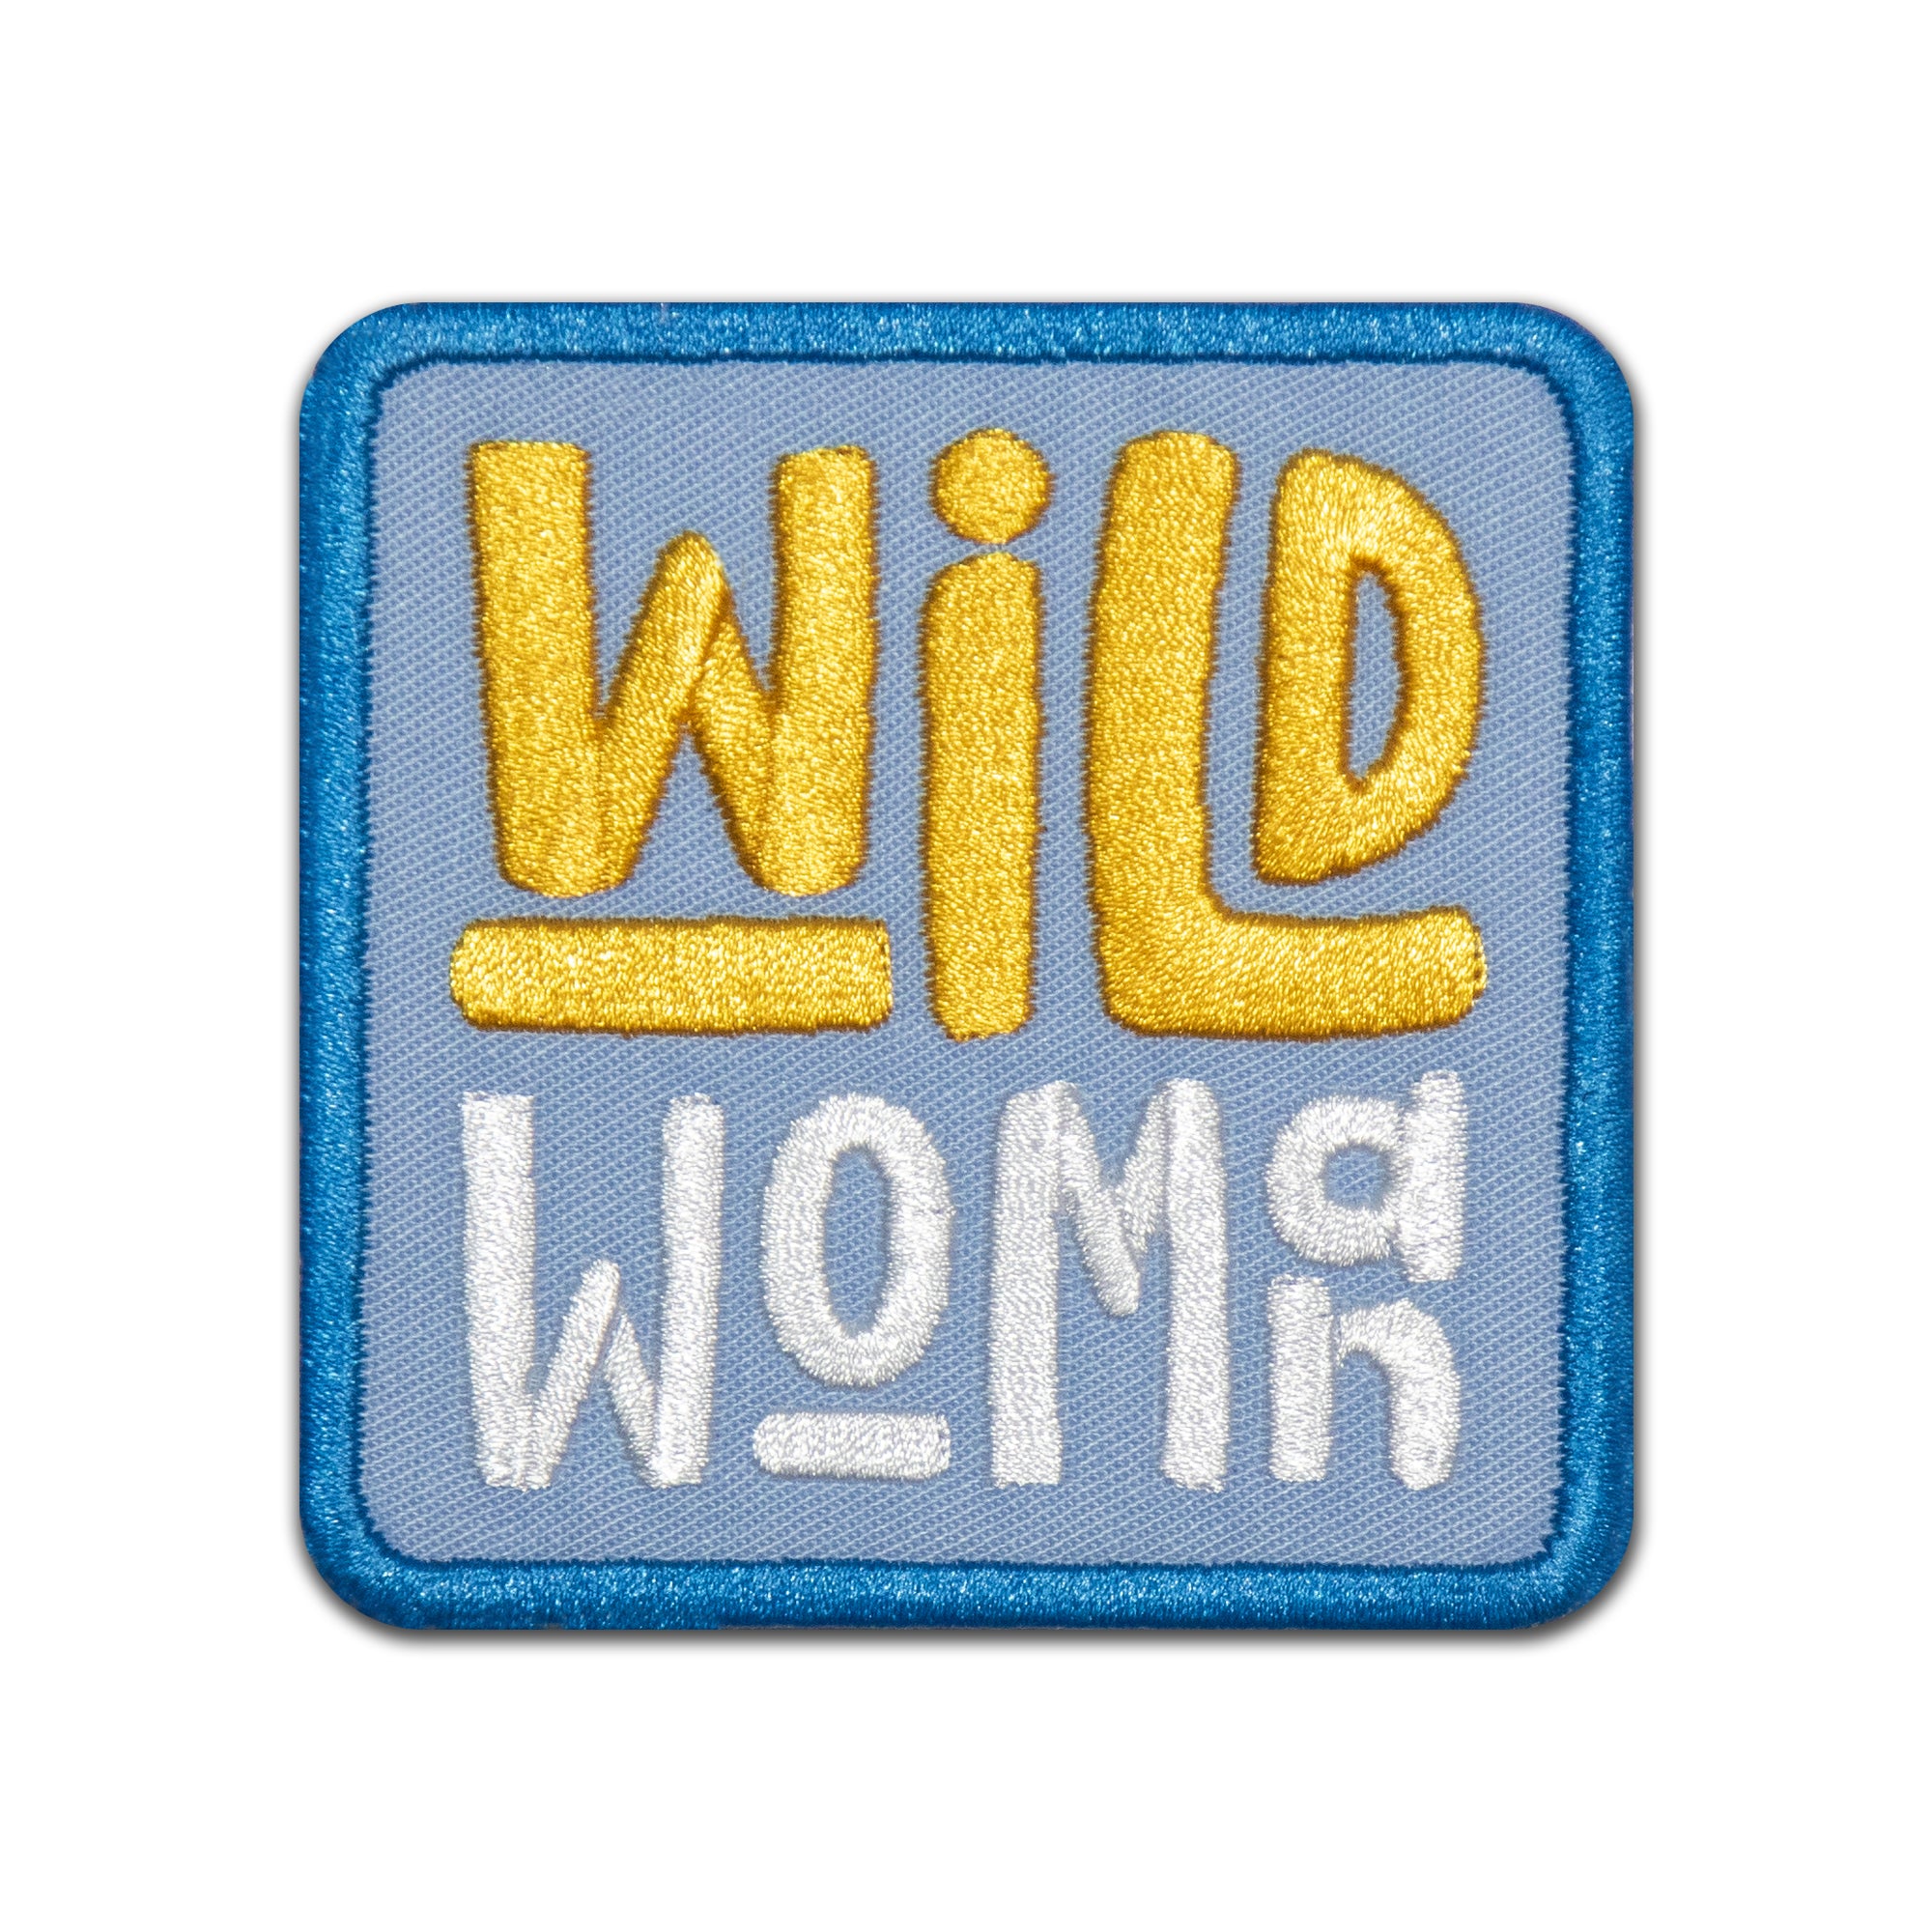 Wild Woman Patch